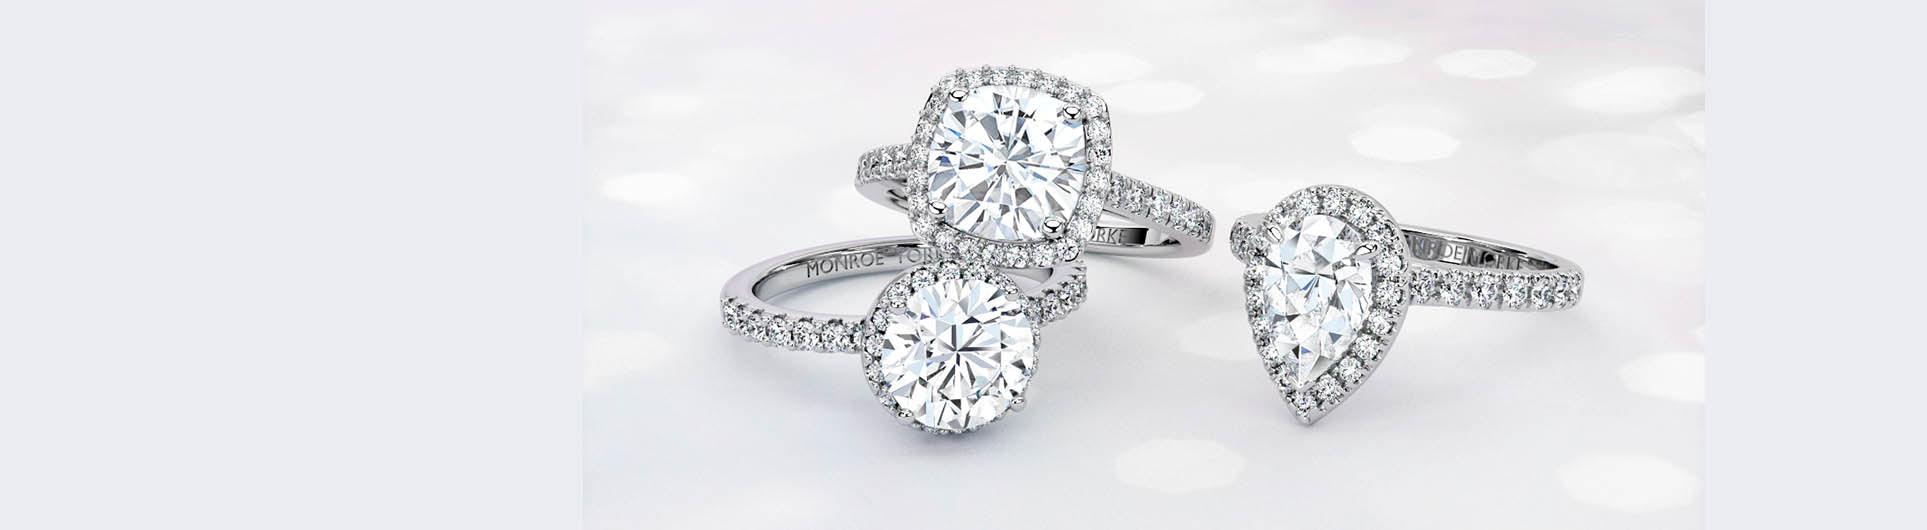 Buy your Engagement Ring in Australia from Monroe Yorke Diamonds